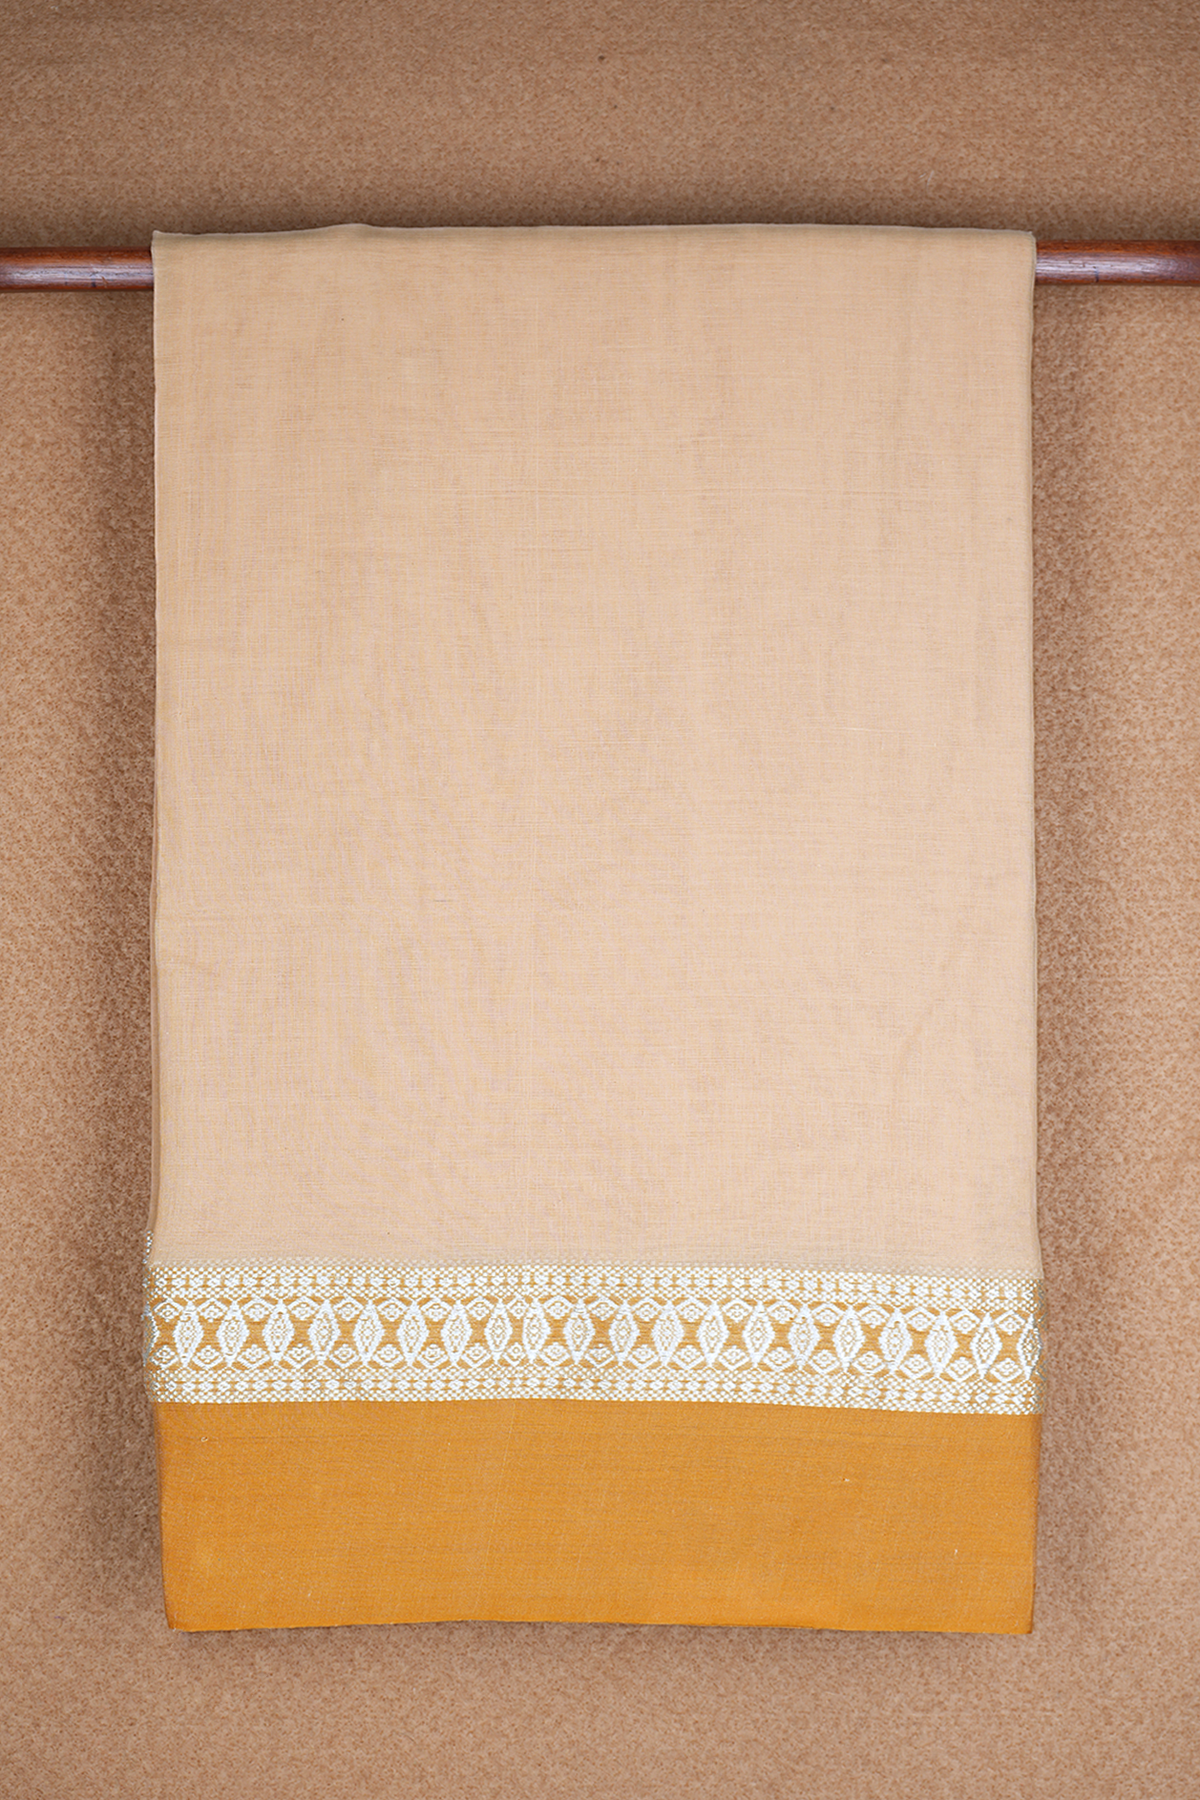 Threadwork Border Plain Dark Cream Color Bengal Cotton Saree